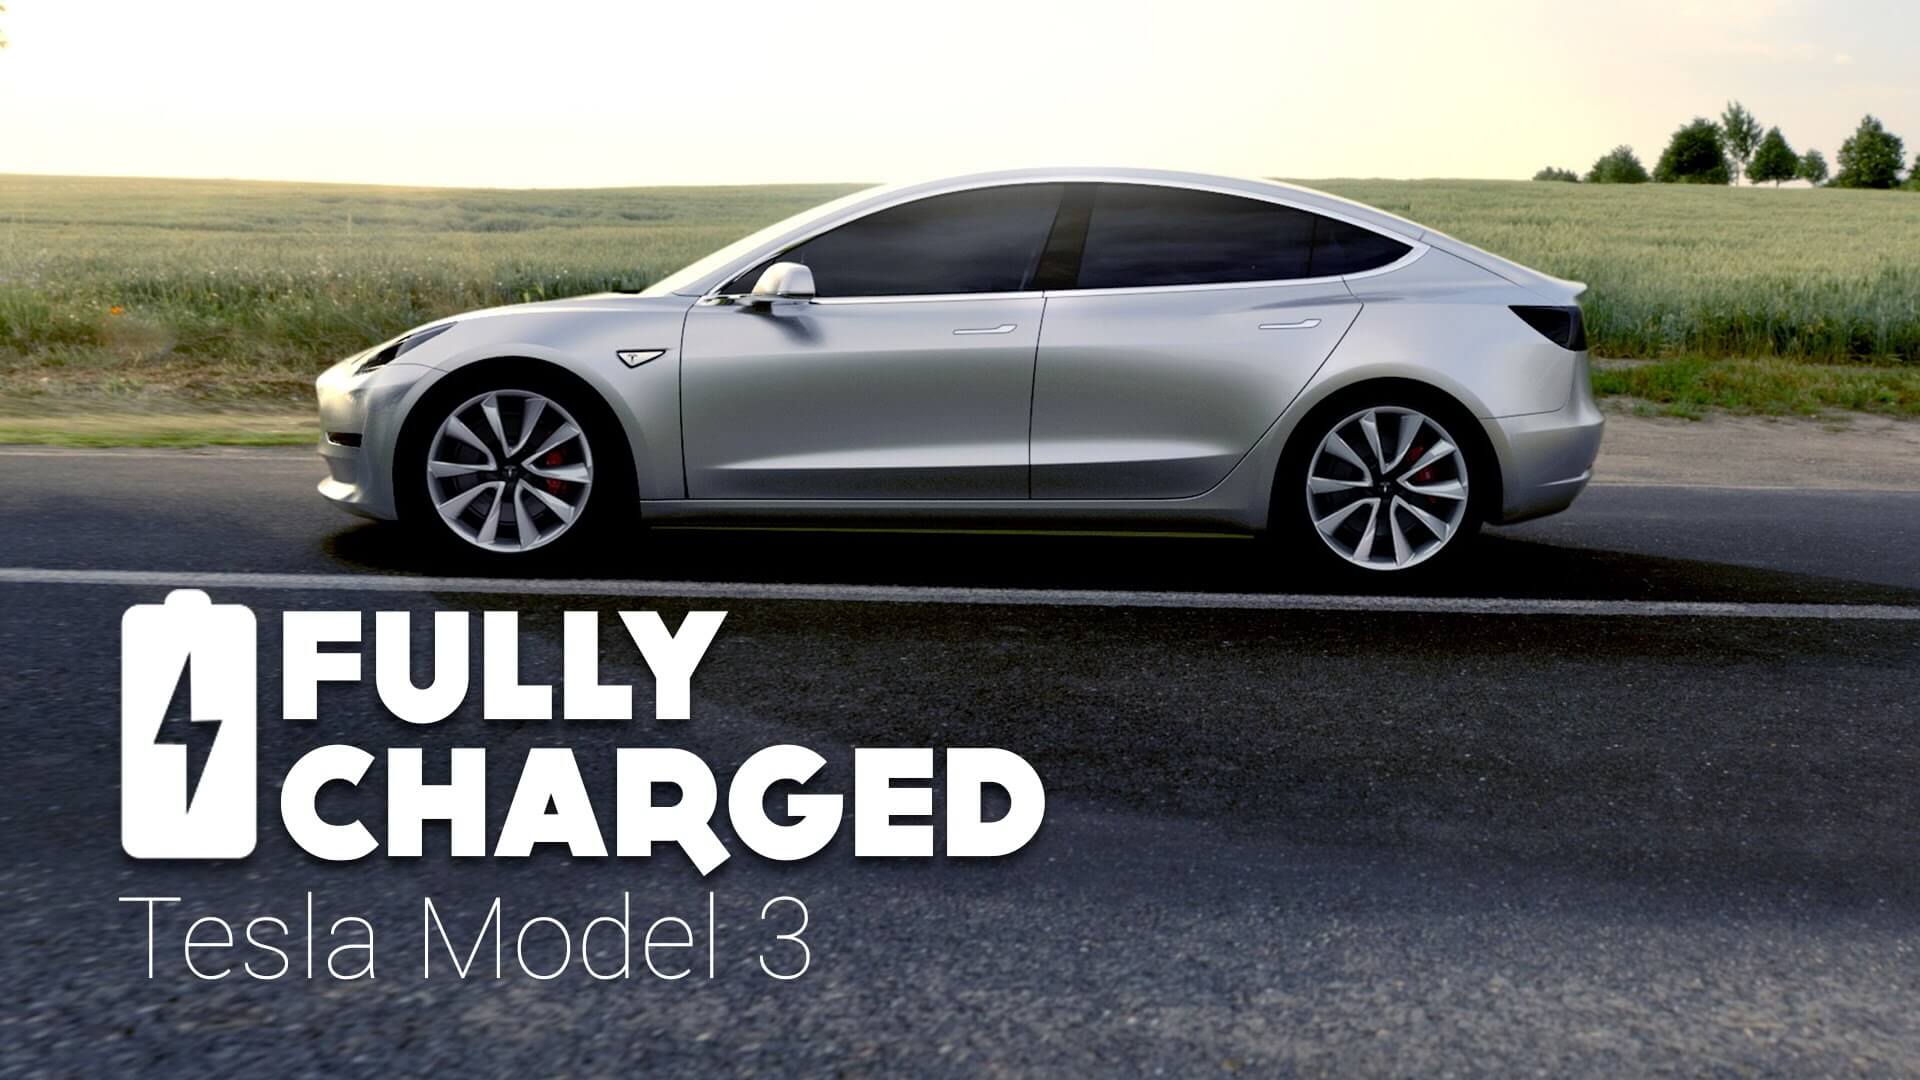 Tesla begins production of the Model 3